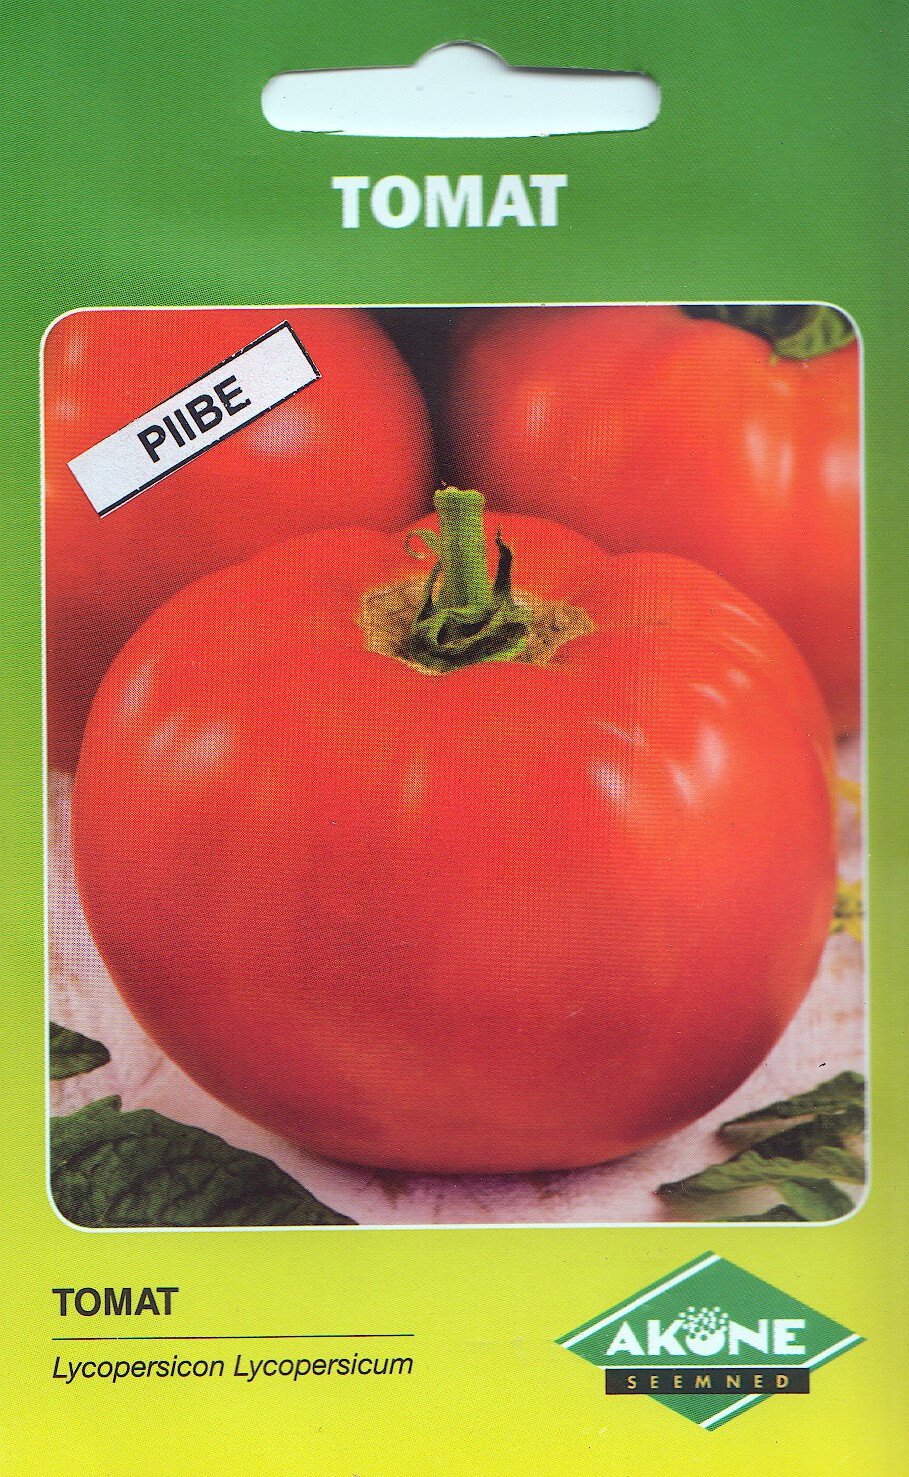 Tomat “Piibe F1”